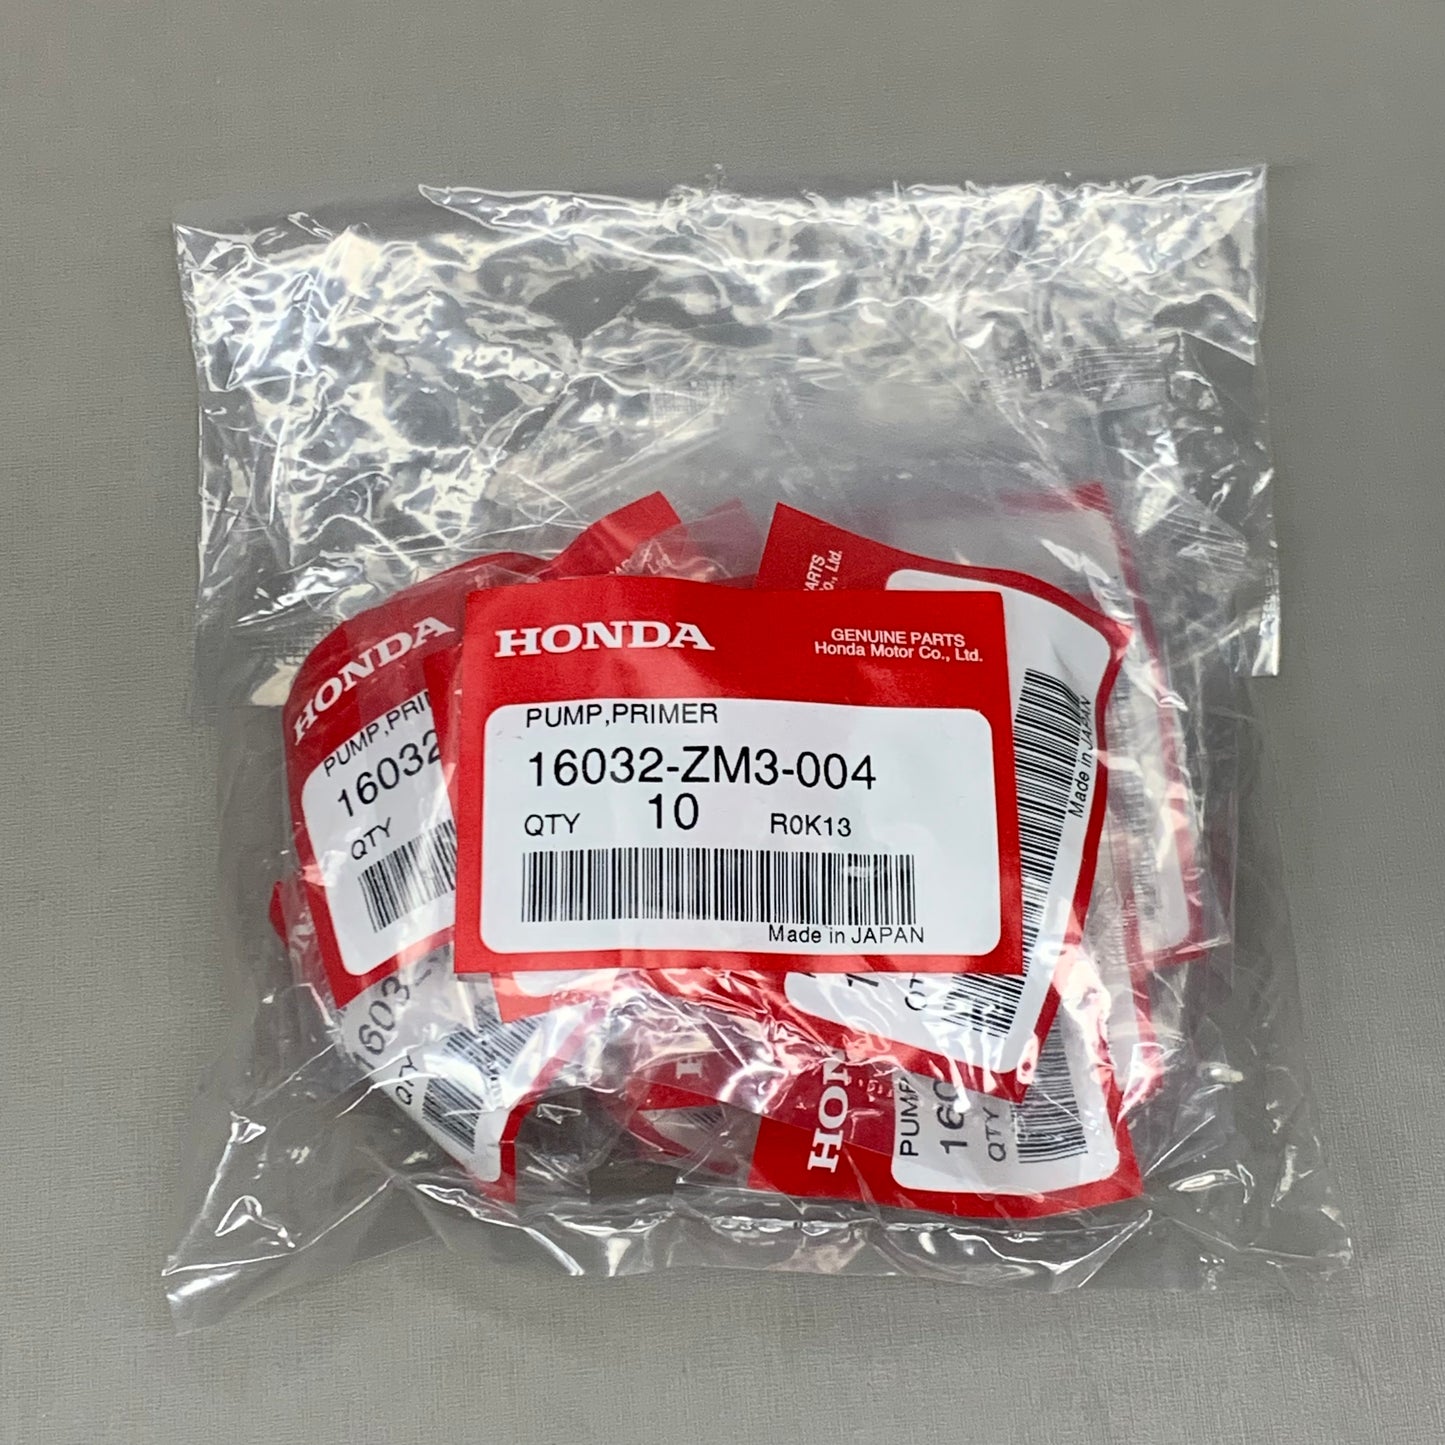 HONDA Primer Pump 16032-ZM3-004 10pk (New)